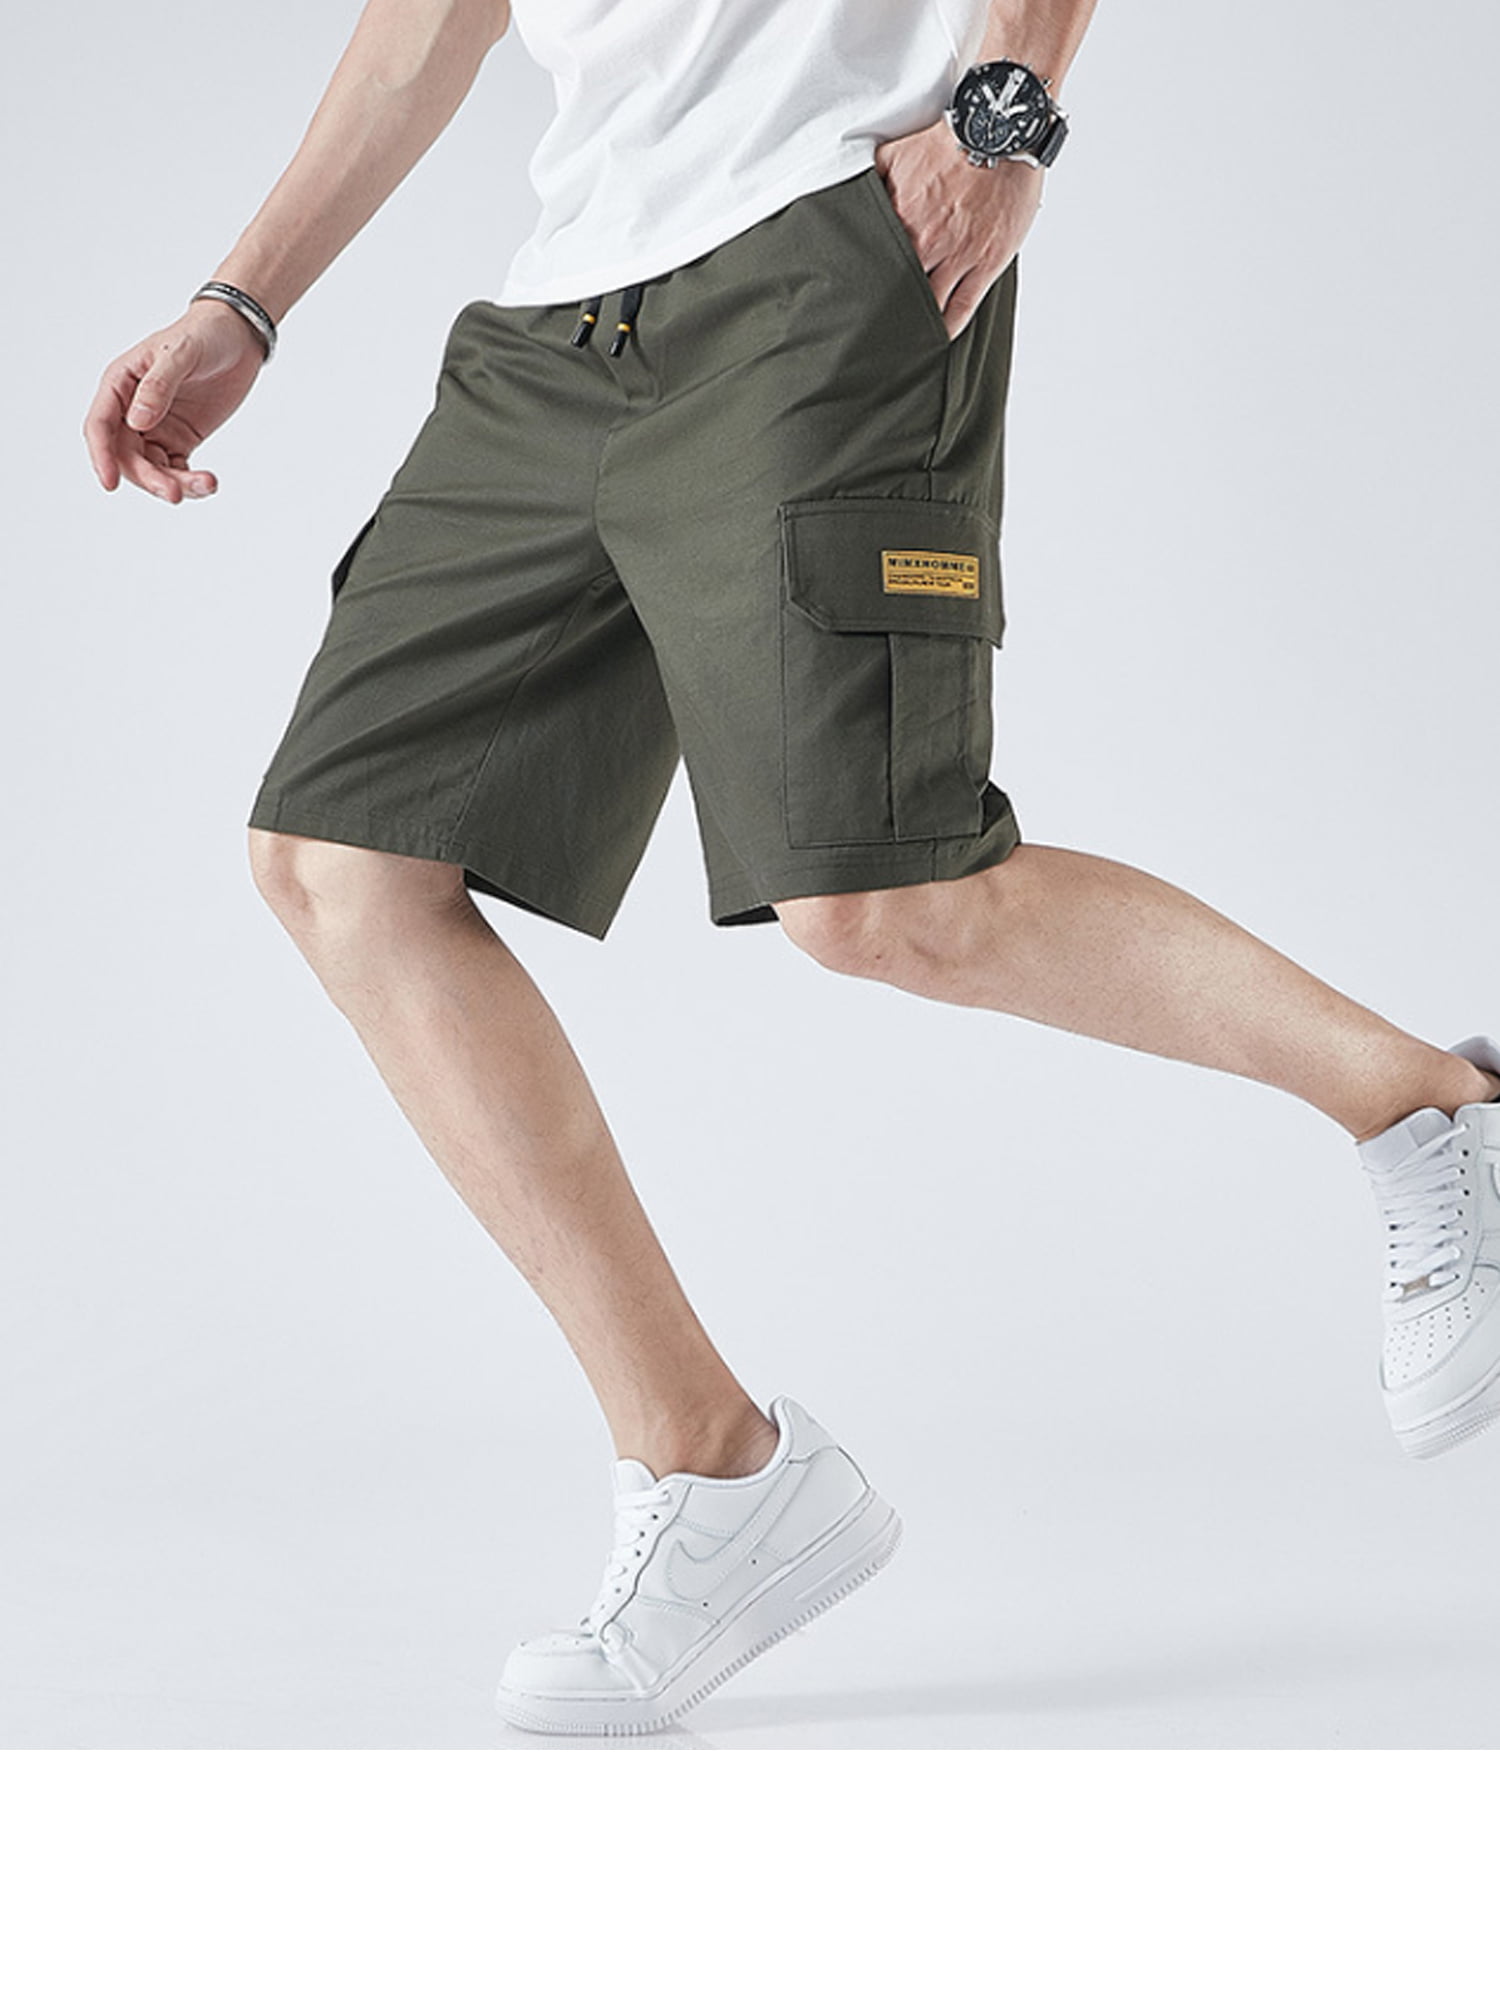 YYG Mens Cargo Casual Shorts Solid Multi Pockets Outdoor Shorts Sweatpants 